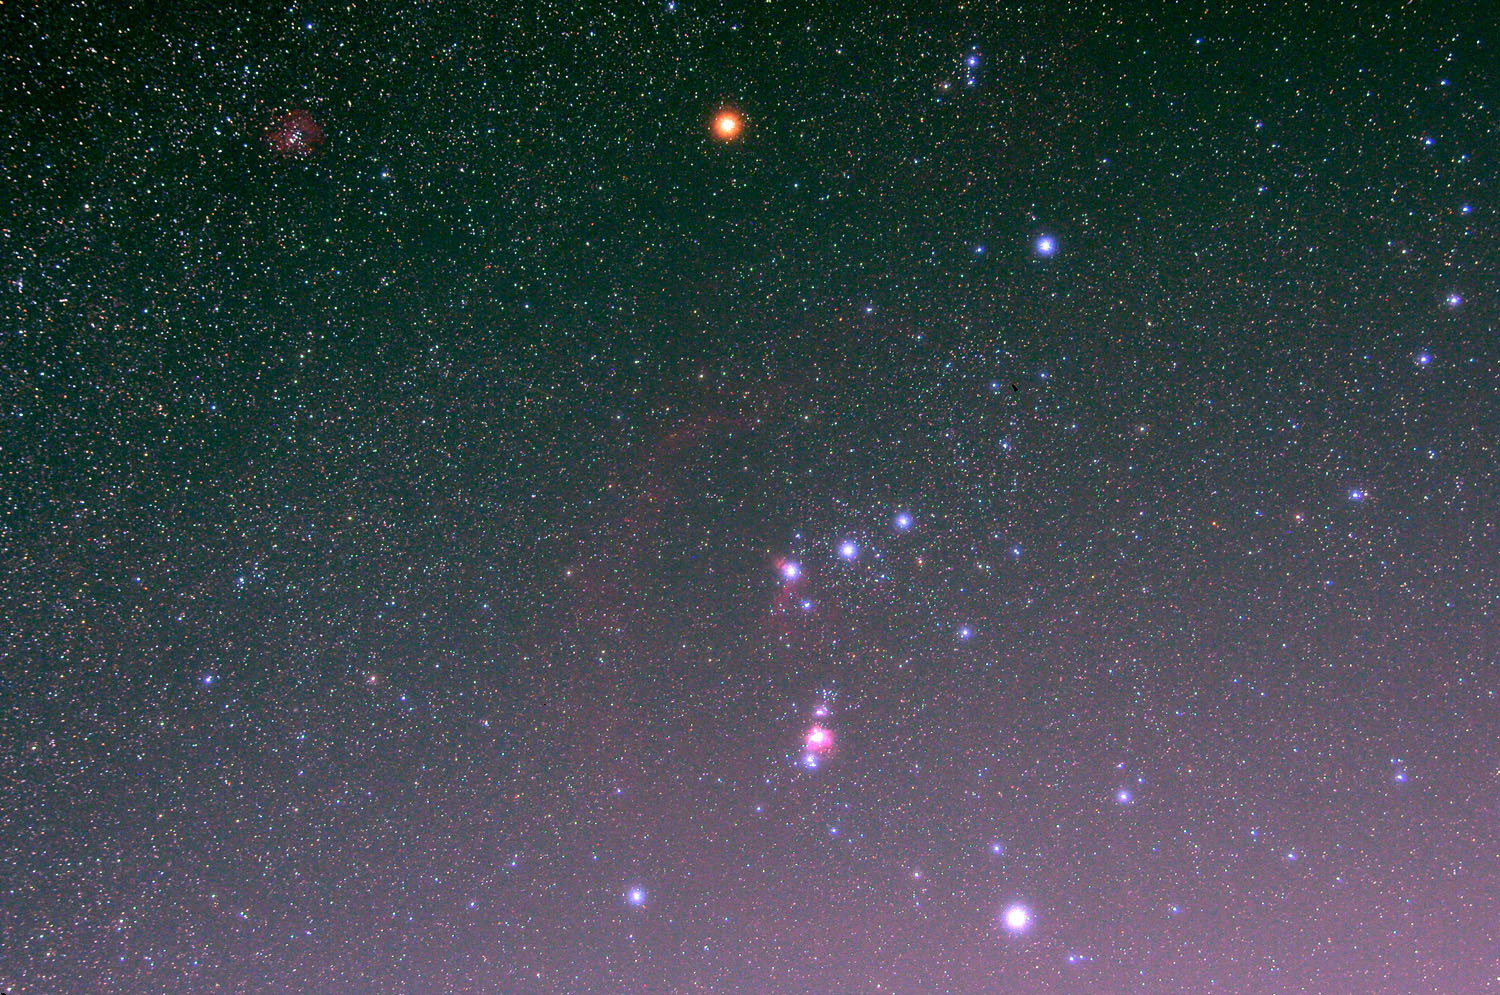 Orion-130202-iop-30m-800-201cs.jpg